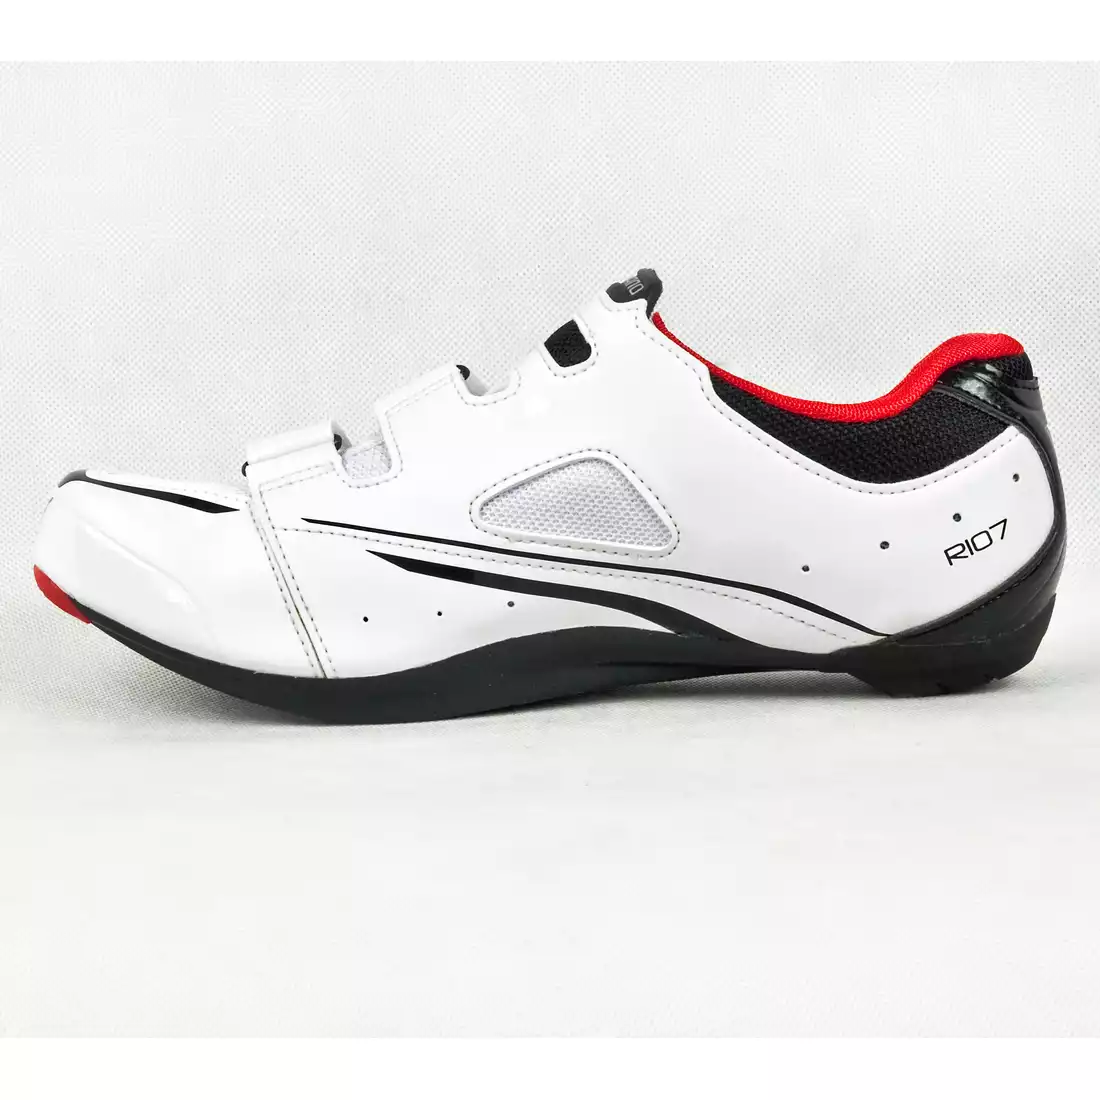 SHIMANO SH-R107  - buty szosowe, kolor: biały